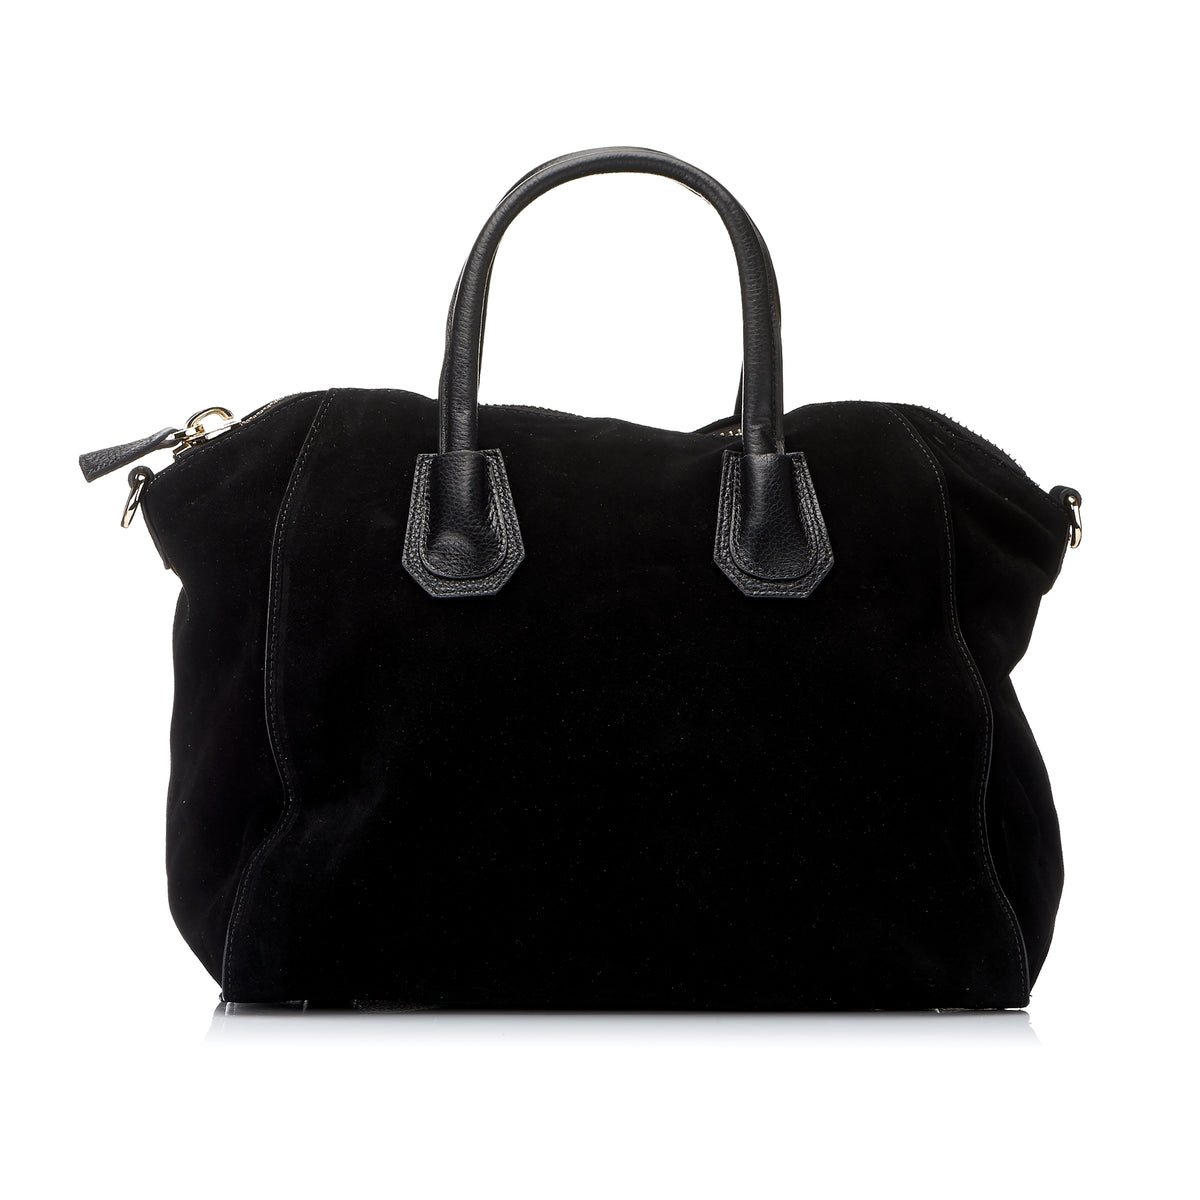 ST IVES - Black Genuine Suede Leather Handbag  - Belt N Bags